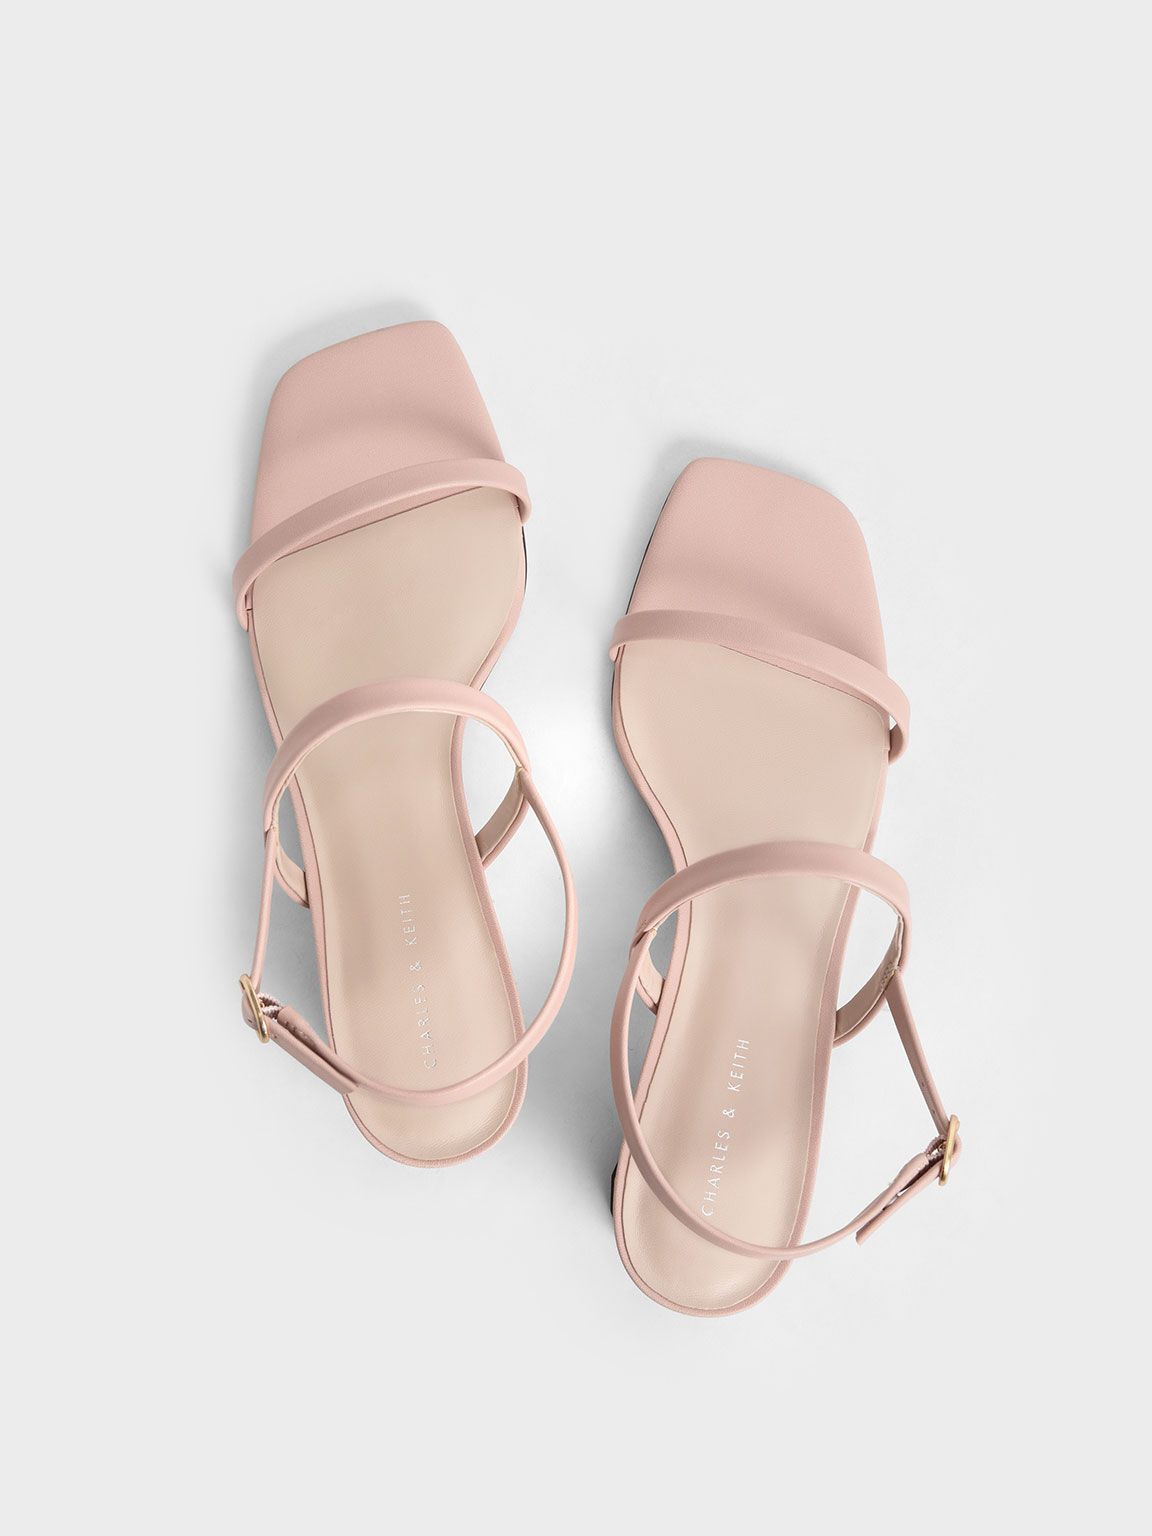 Metallic Cone Heel Slingback Sandals, Pink, hi-res